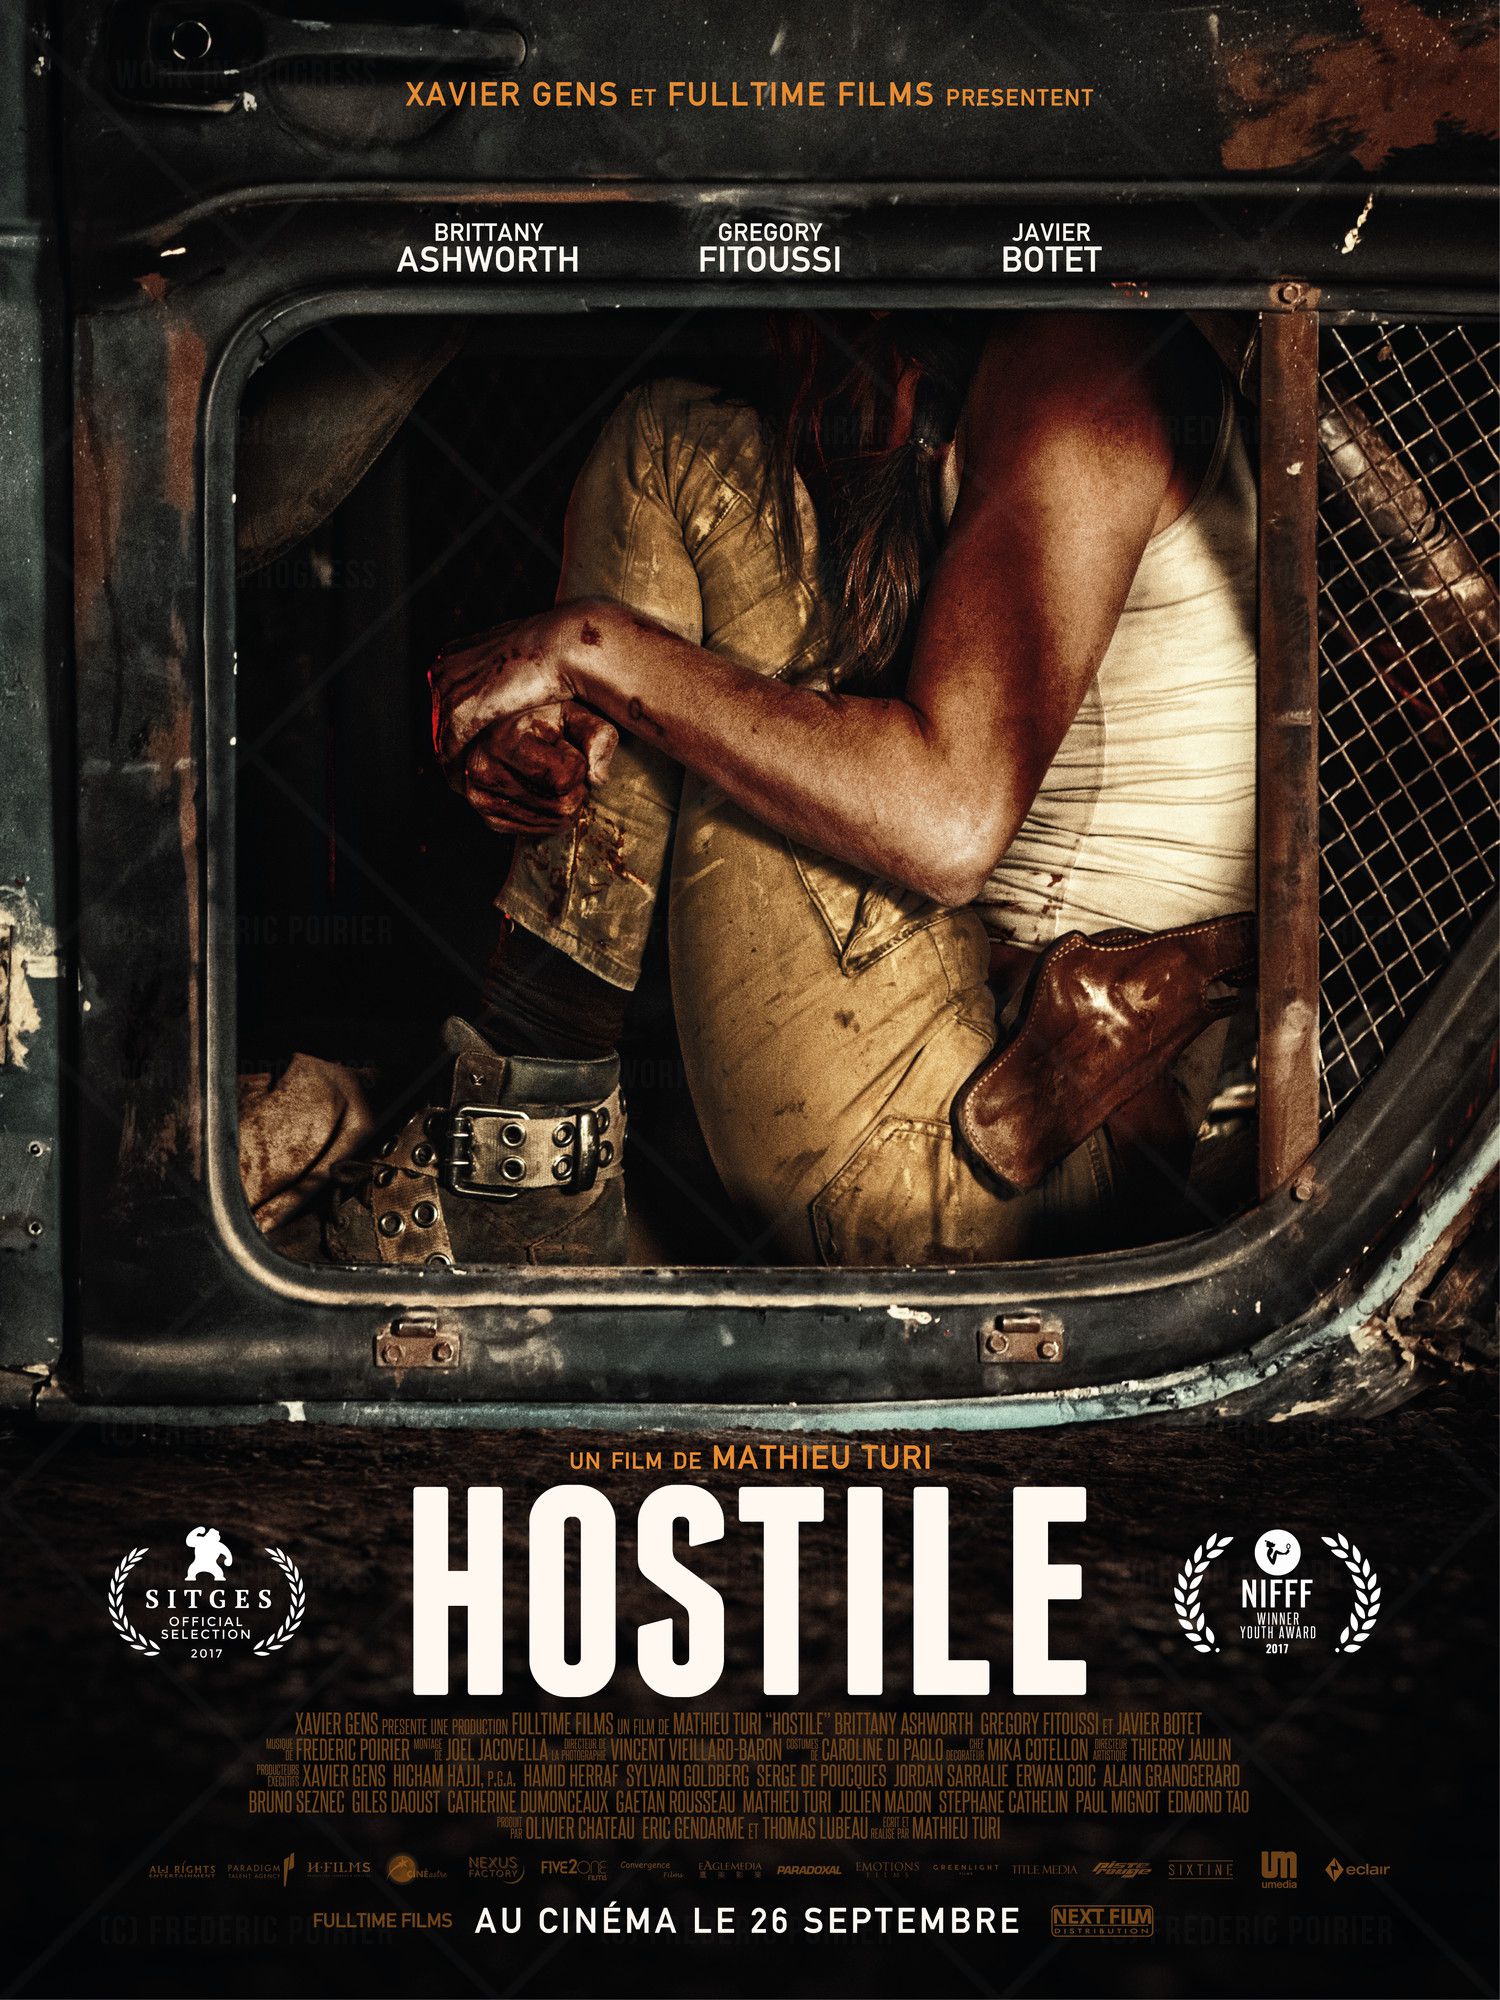 Hostile - Film (2018) streaming VF gratuit complet